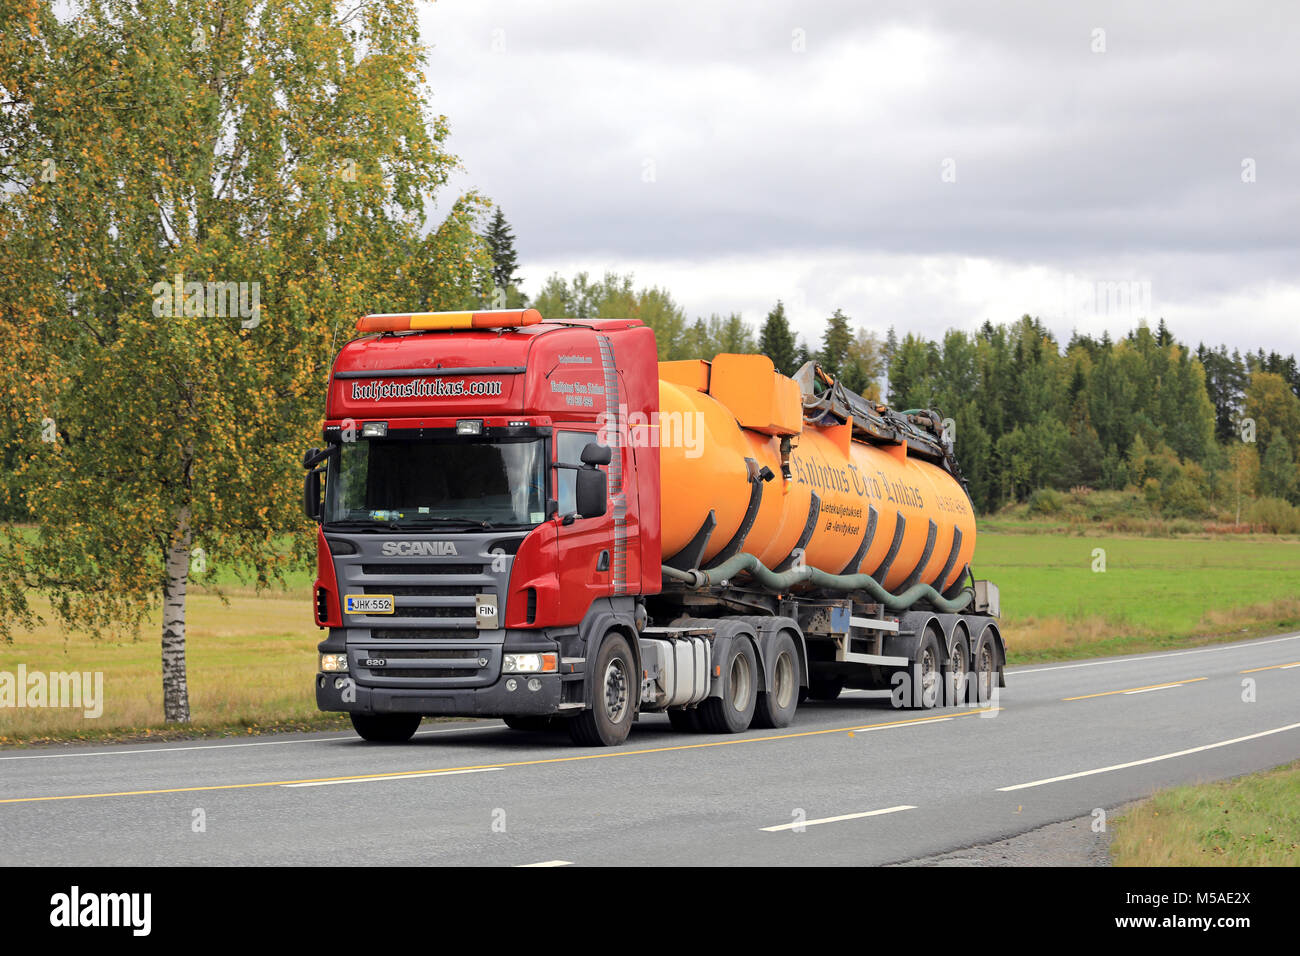 JOKIOINEN, Finnland - 15. SEPTEMBER 2017: Scania R620 Gülletank Lkw Kuljetus Tero Liukas bewegt sich entlang der Autobahn an einem Tag im Herbst. Stockfoto